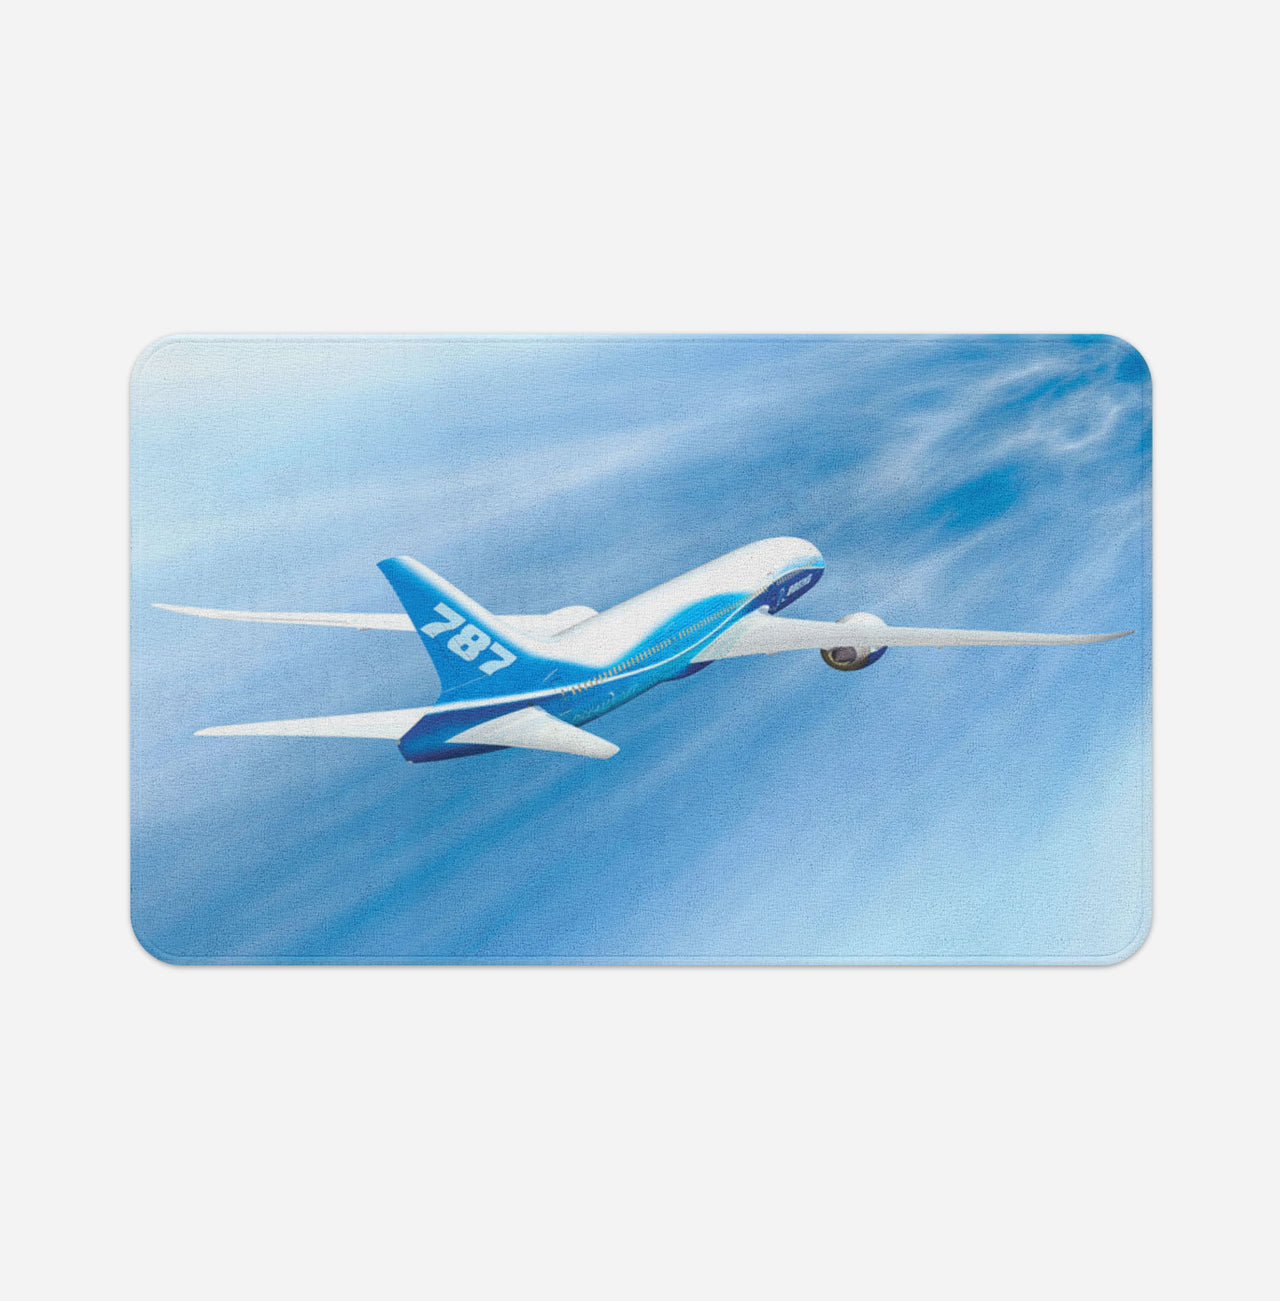 Beautiful Painting of Boeing 787 Dreamliner Designed Bath Mats